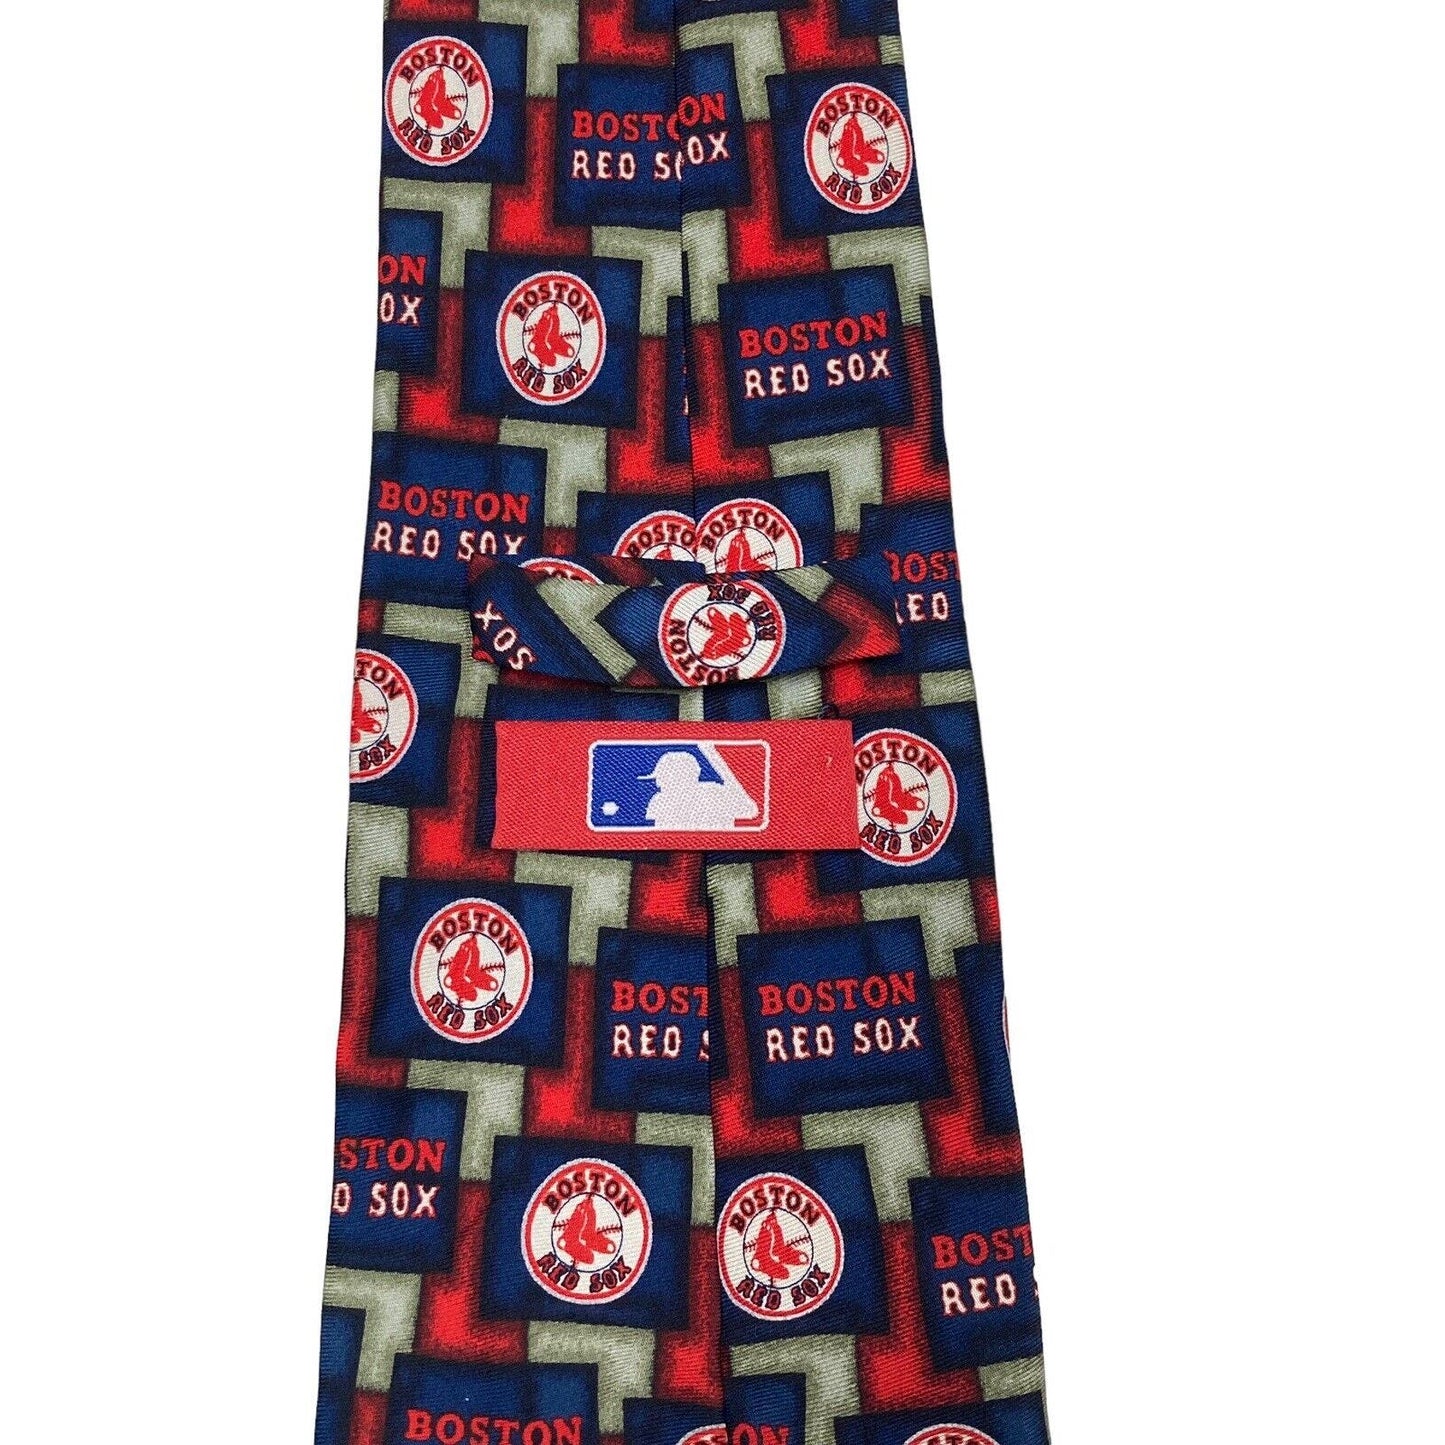 Eagle Wings MLB Boston Red Sox Logo Baseball Vintage Novelty Necktie 100% Silk